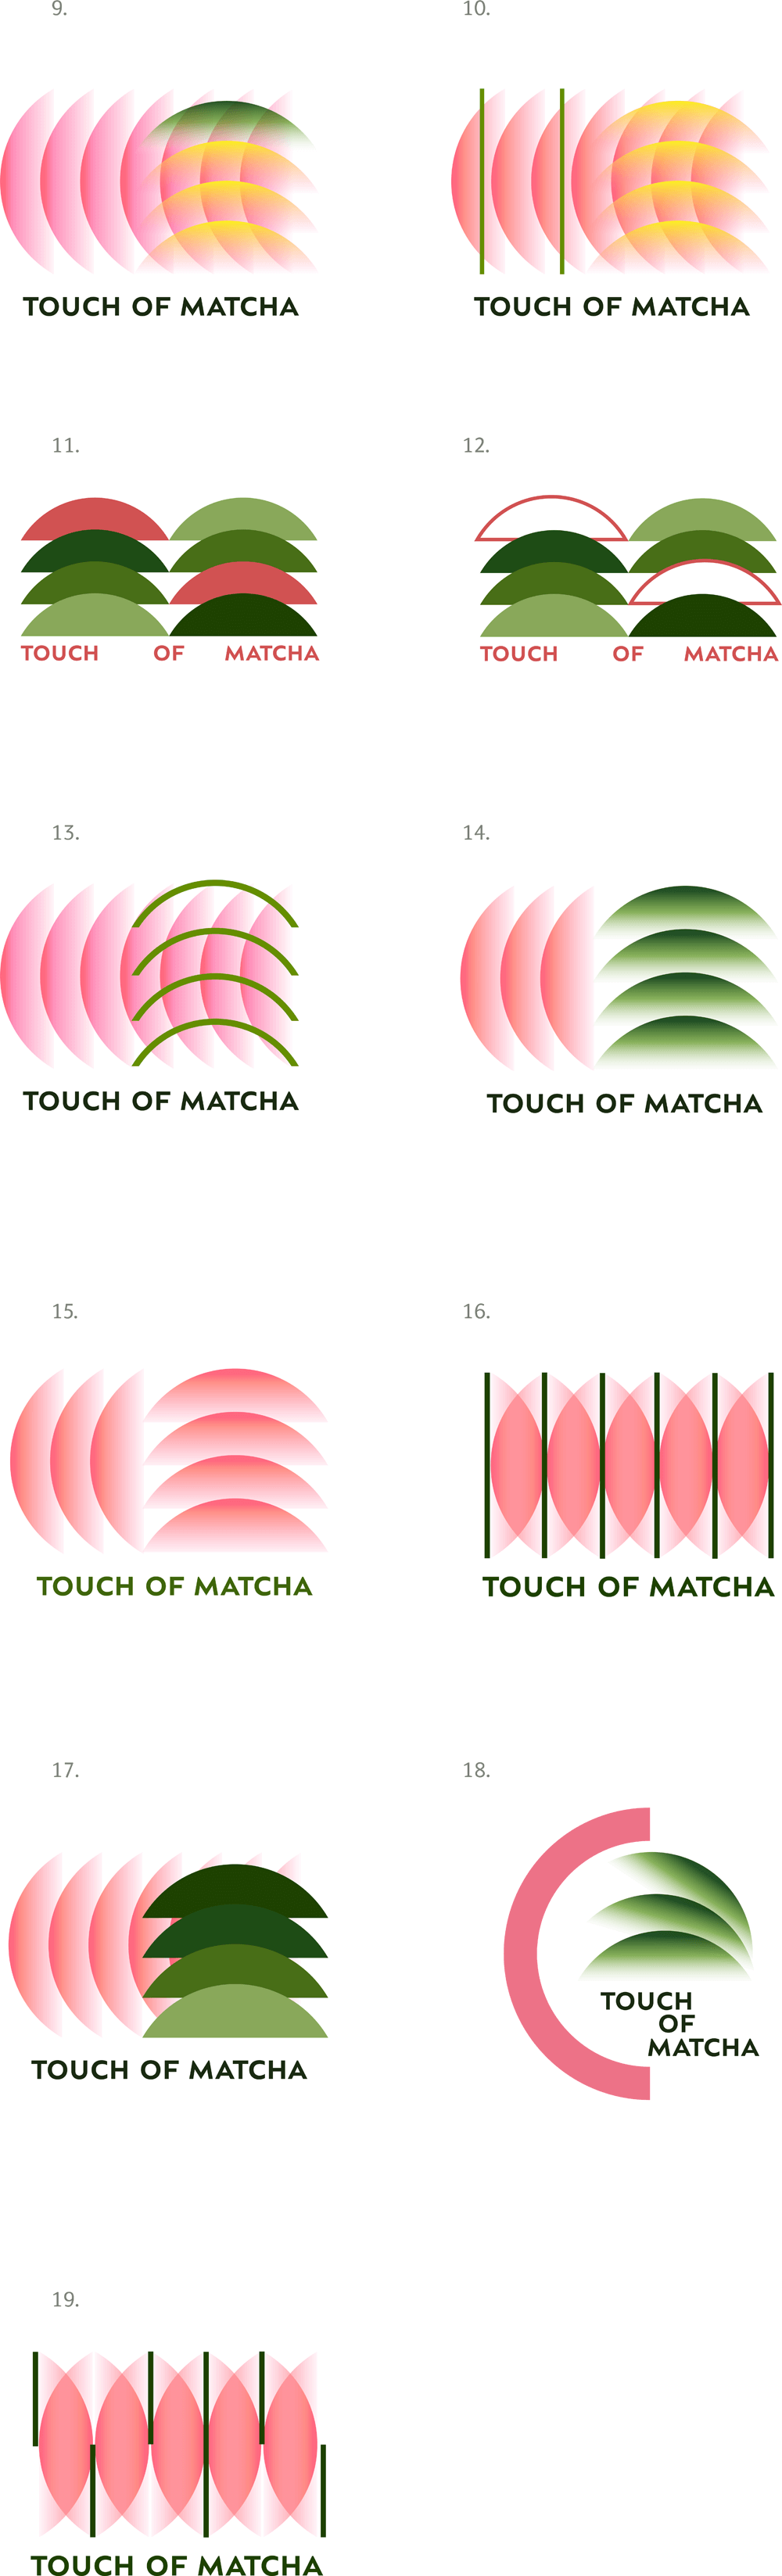 touch of matcha process 17